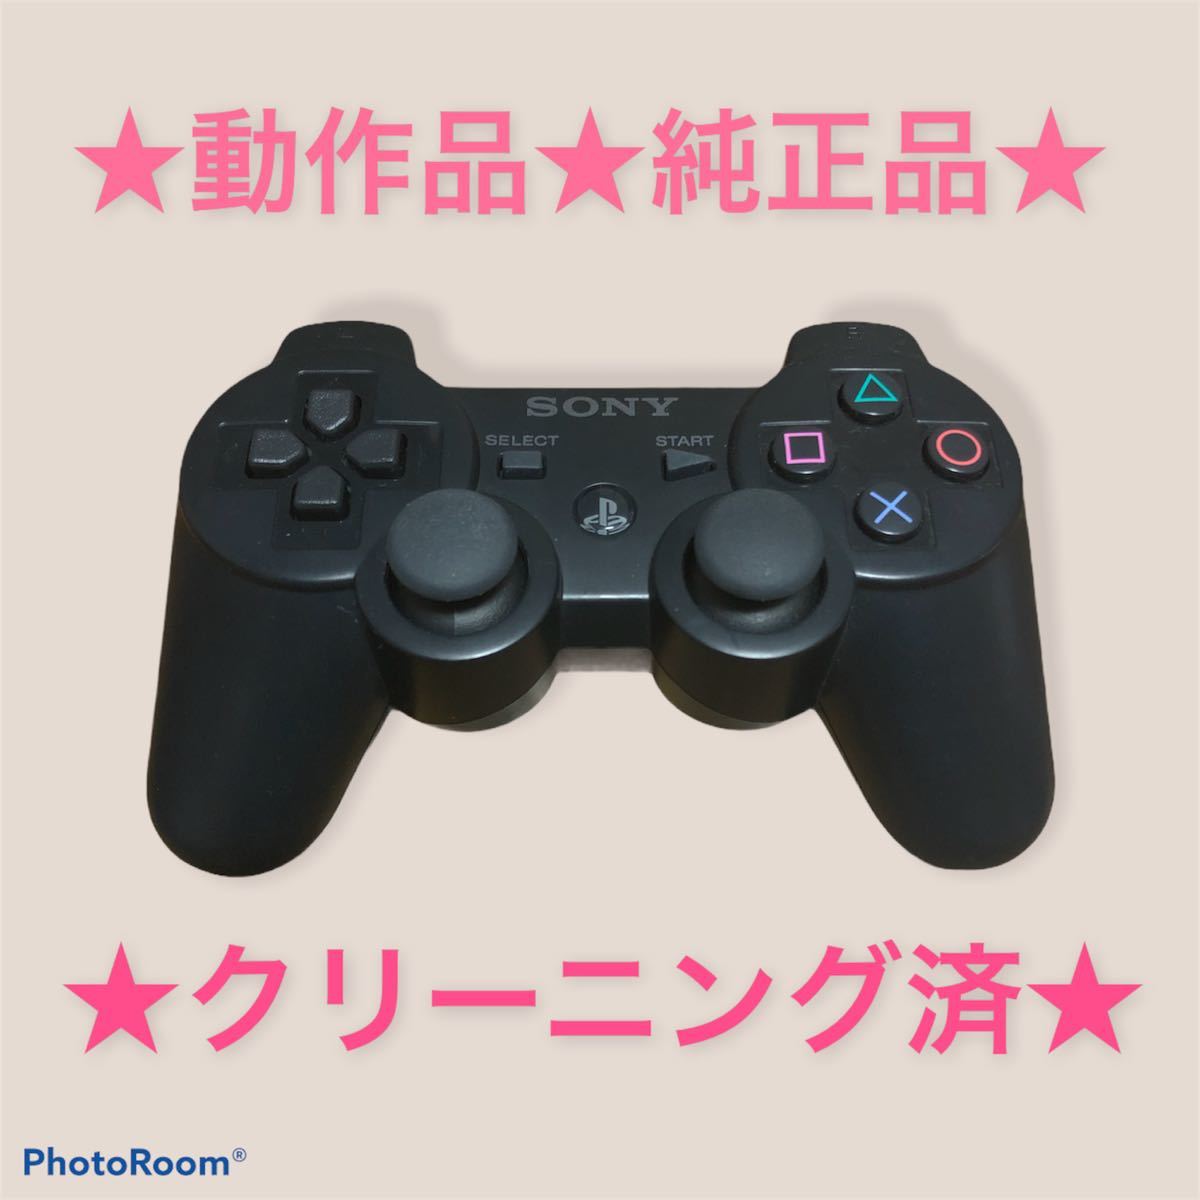 DUALSHOCK3 キャンディー・ピンク コントローラー セット 動作確認済